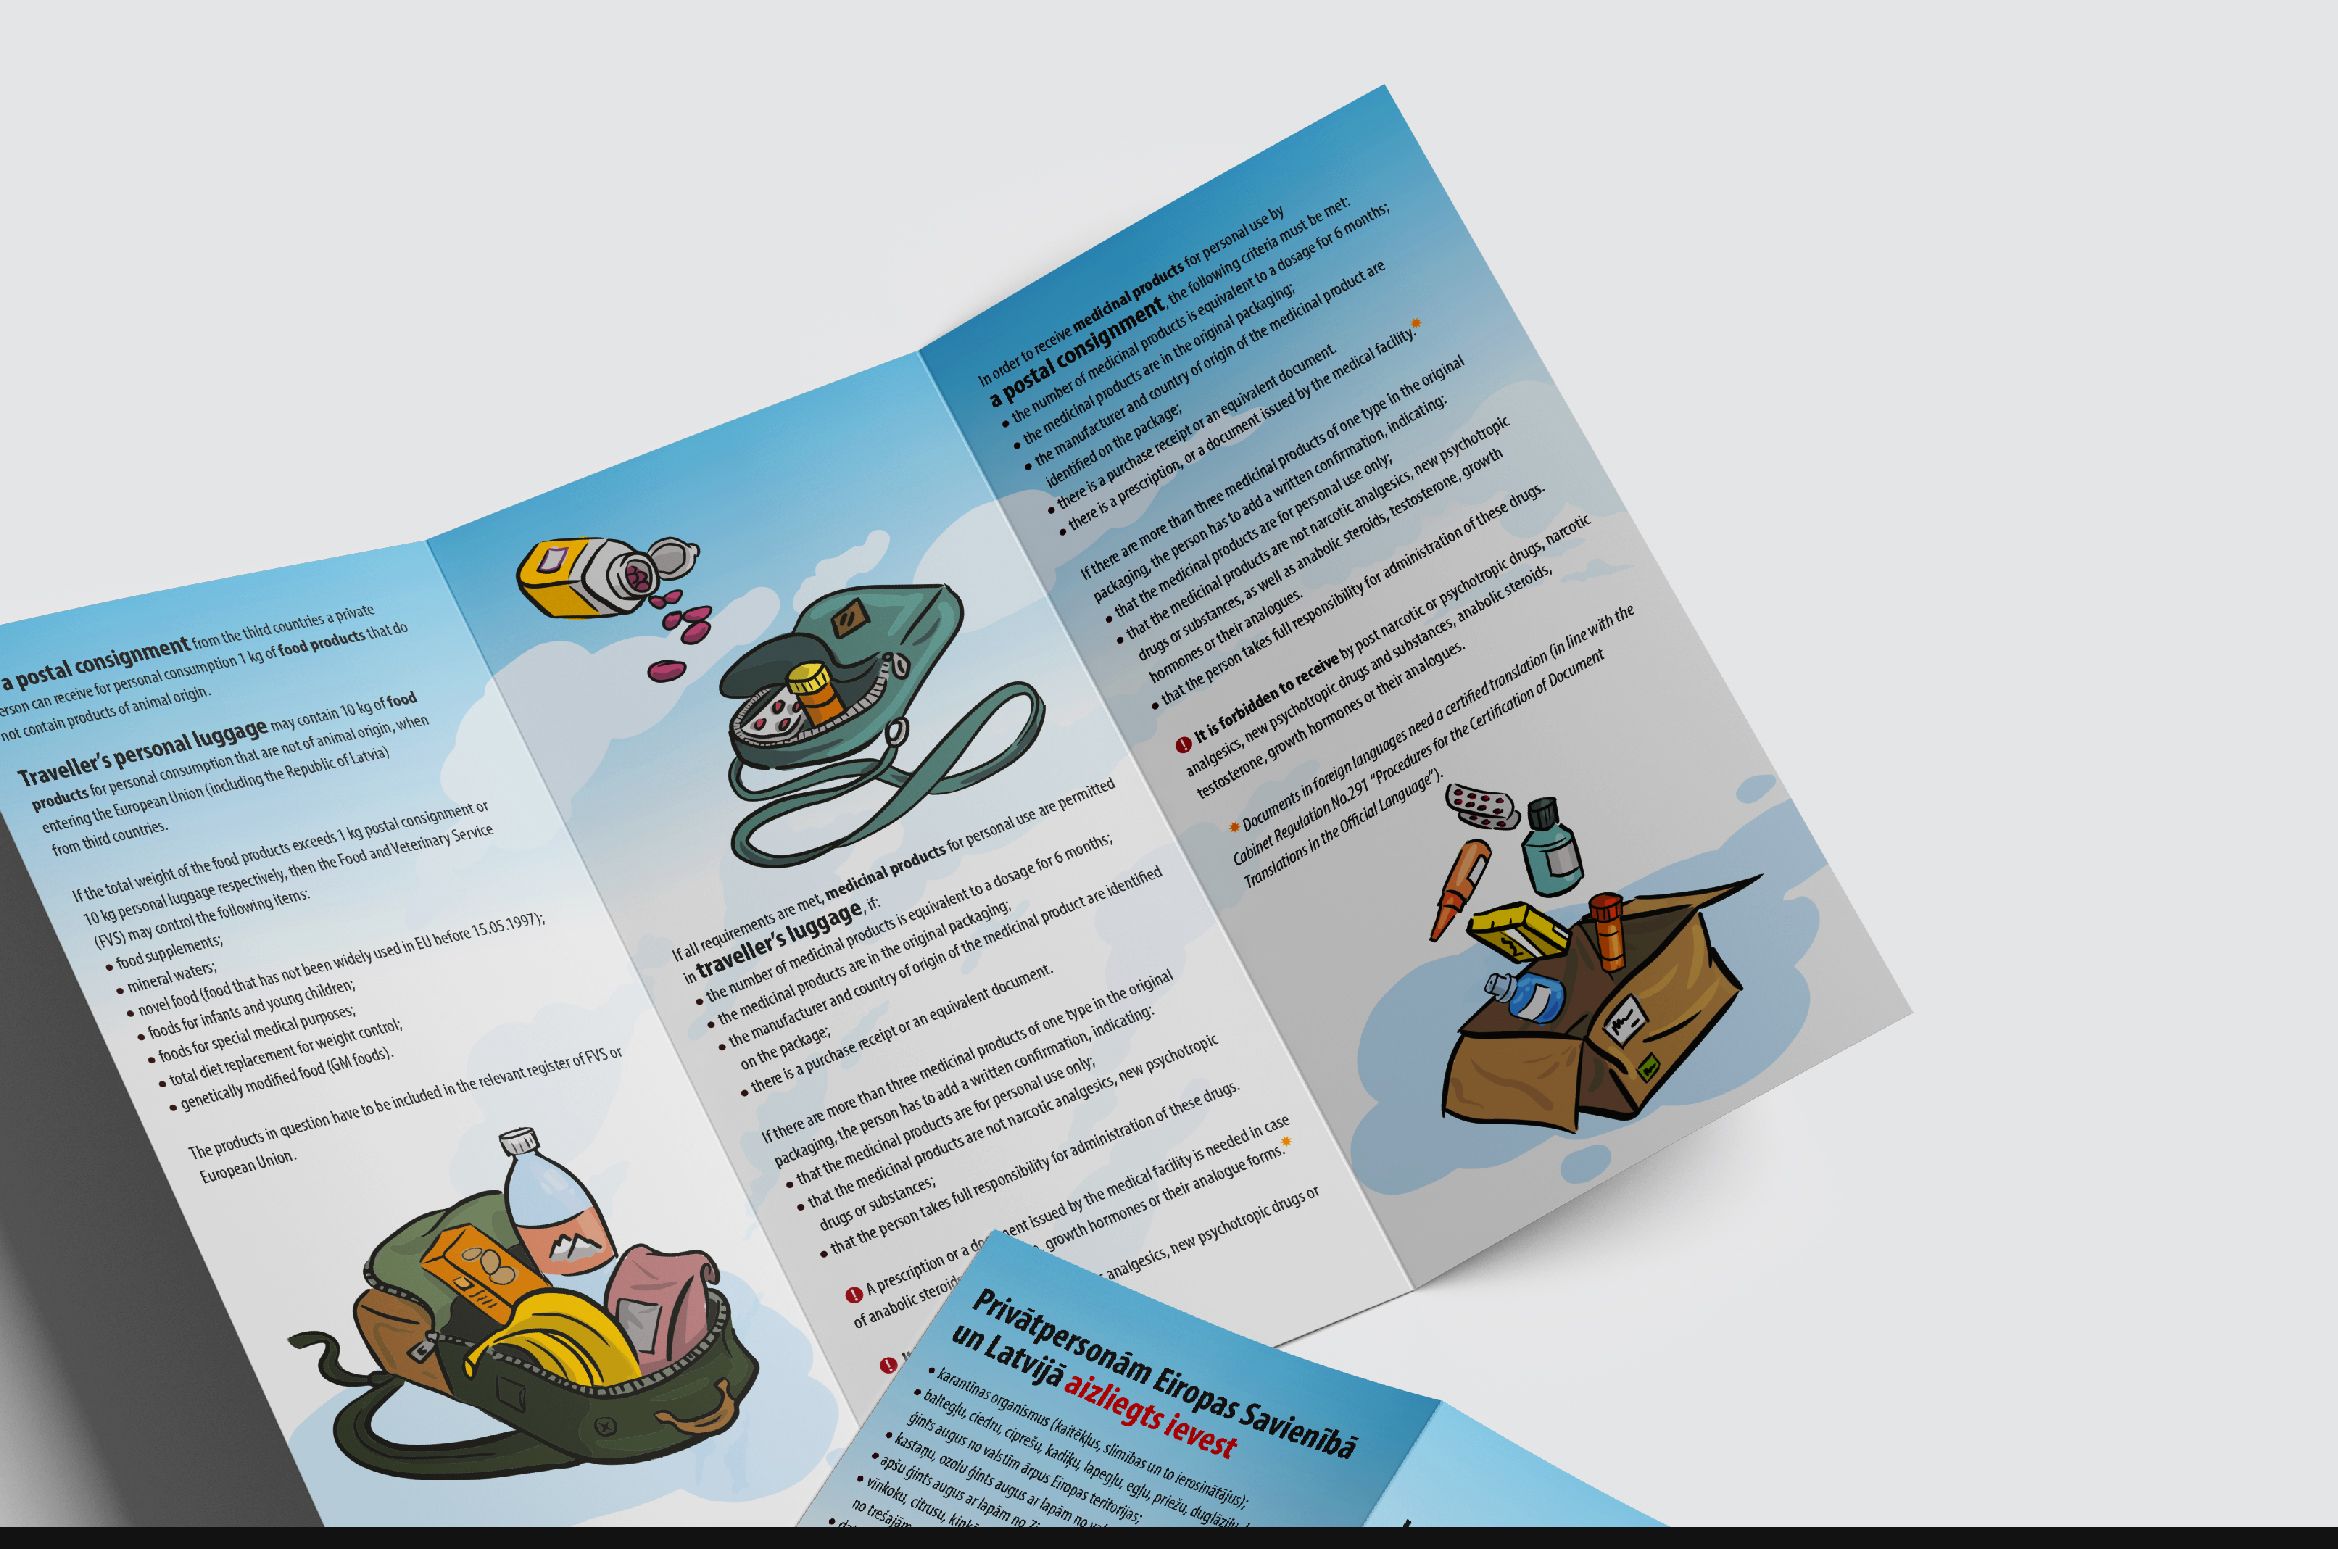 "Food and Veterinary Service Republic of Latvia" brochure design